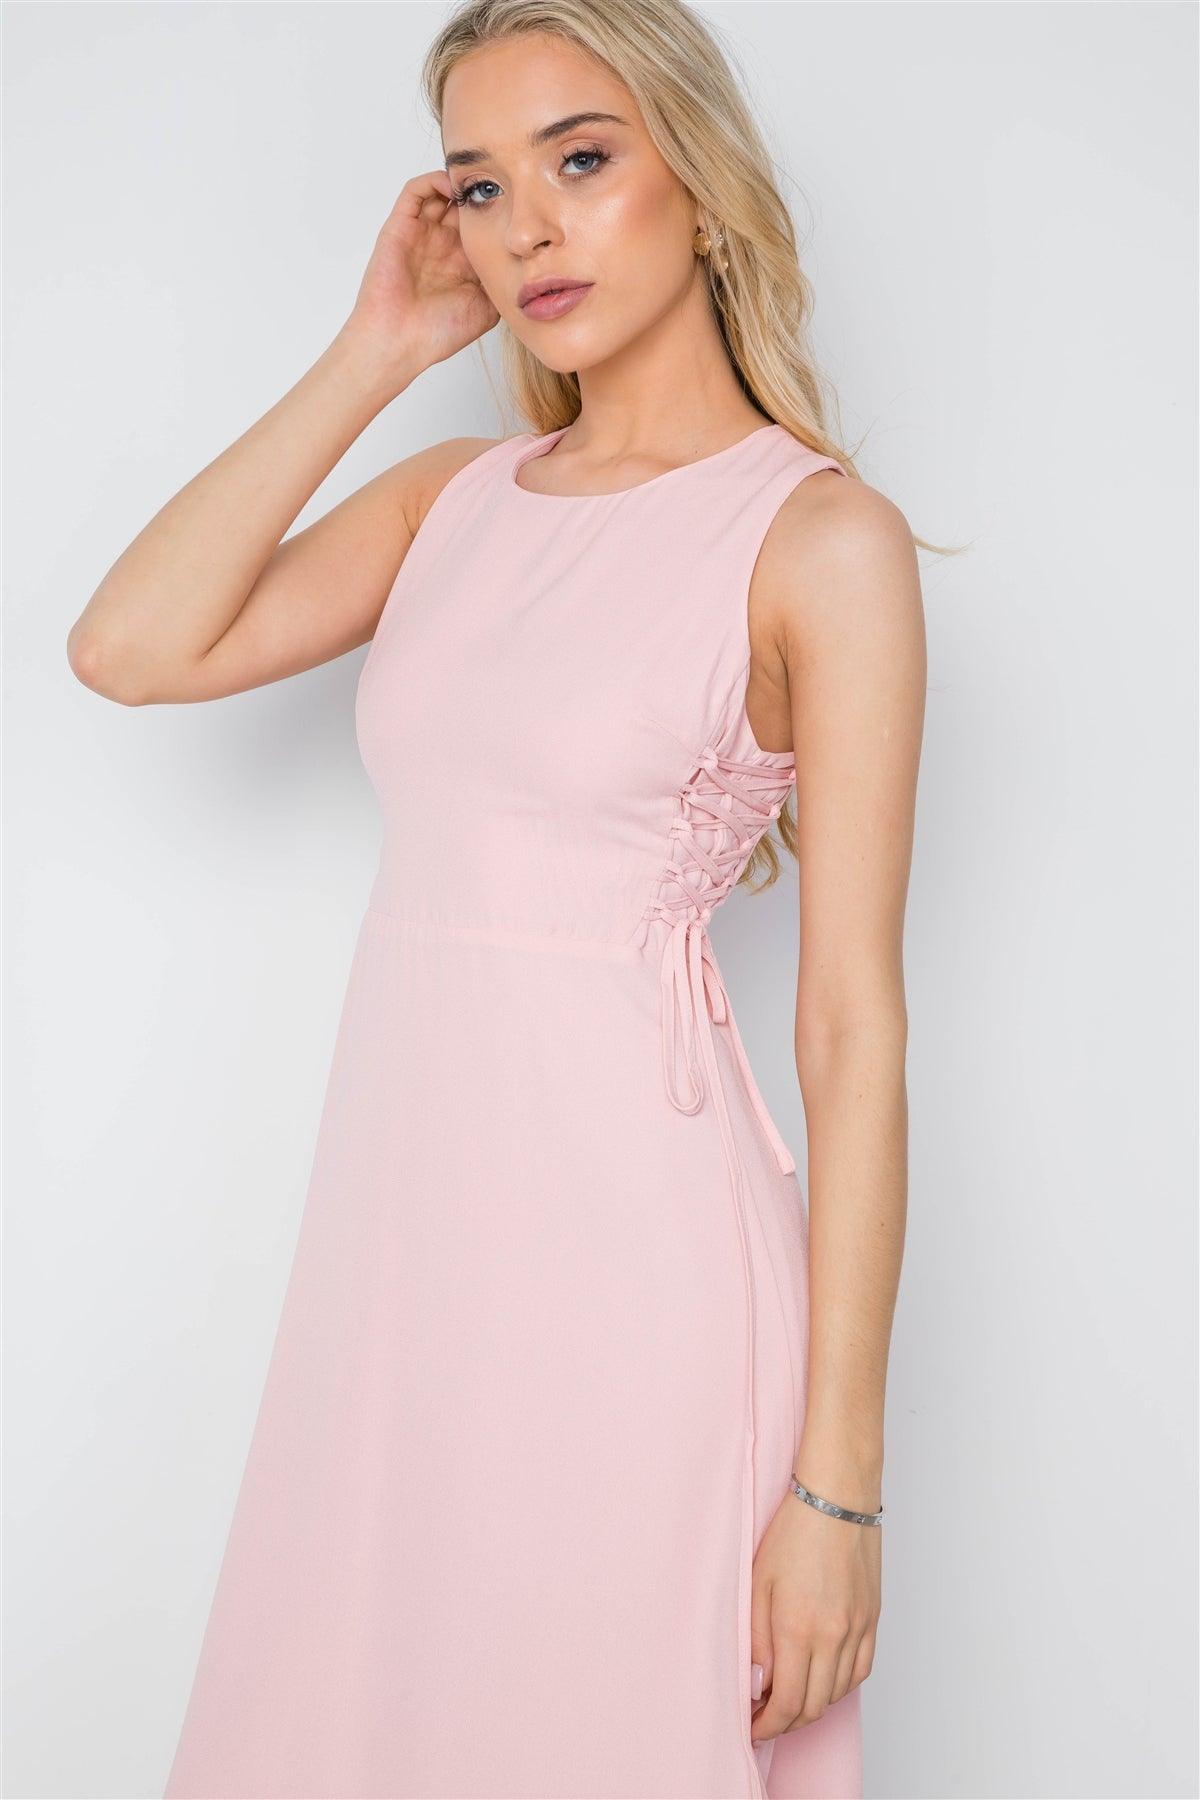 Blush Lace Up Sides Sleeveless Solid Midi Dress /1-2-2-1